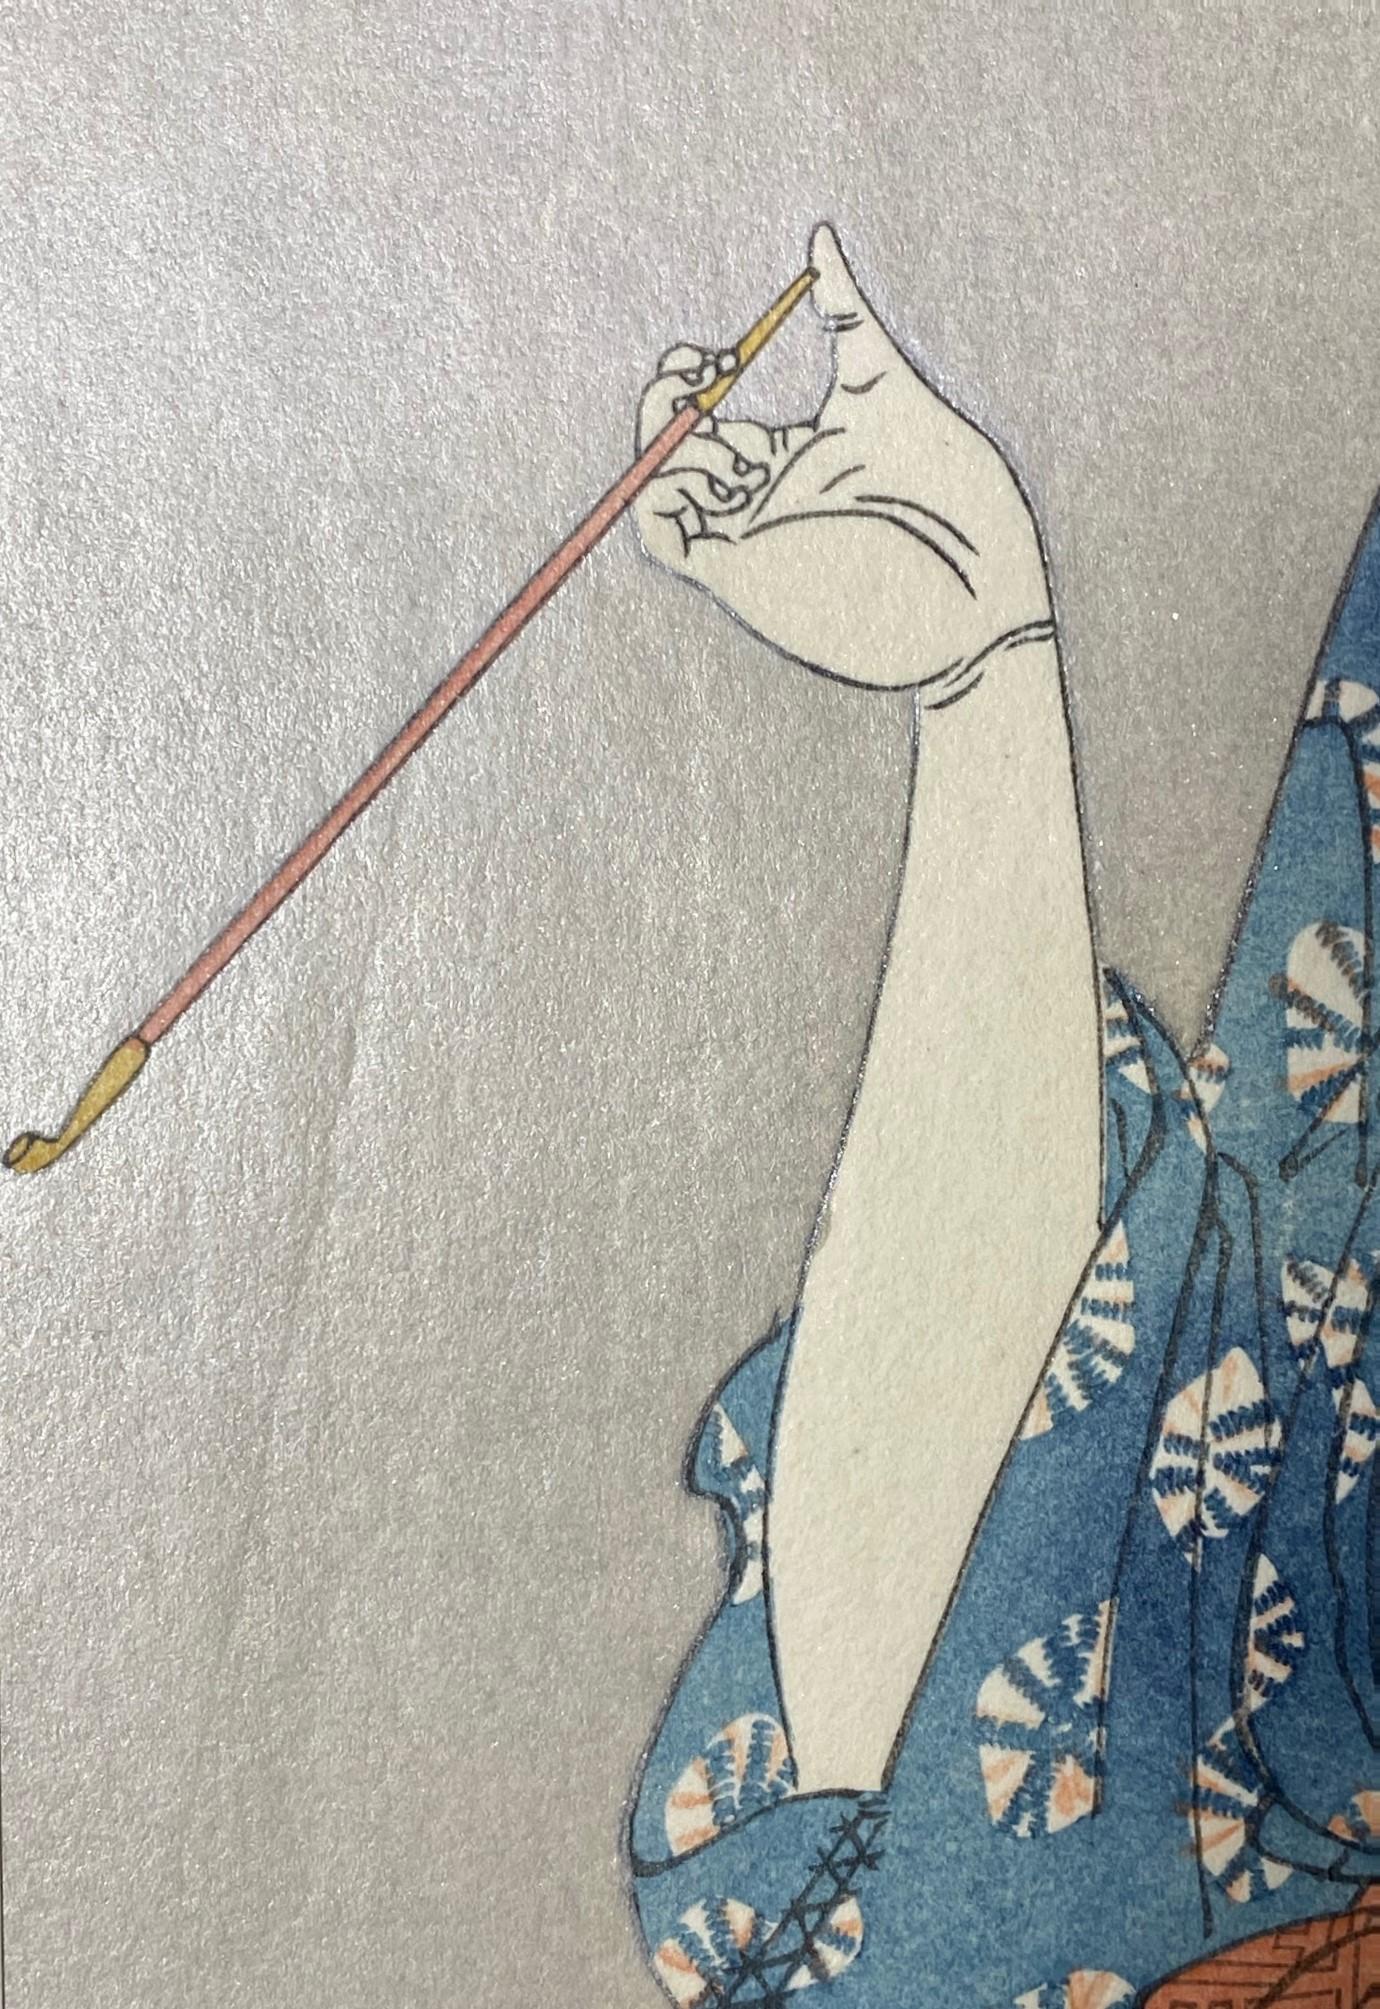 Paper Kitagawa Utamaro Japanese Woodblock Print Edo Semi-Nude Woman Smoking Opium Pipe For Sale